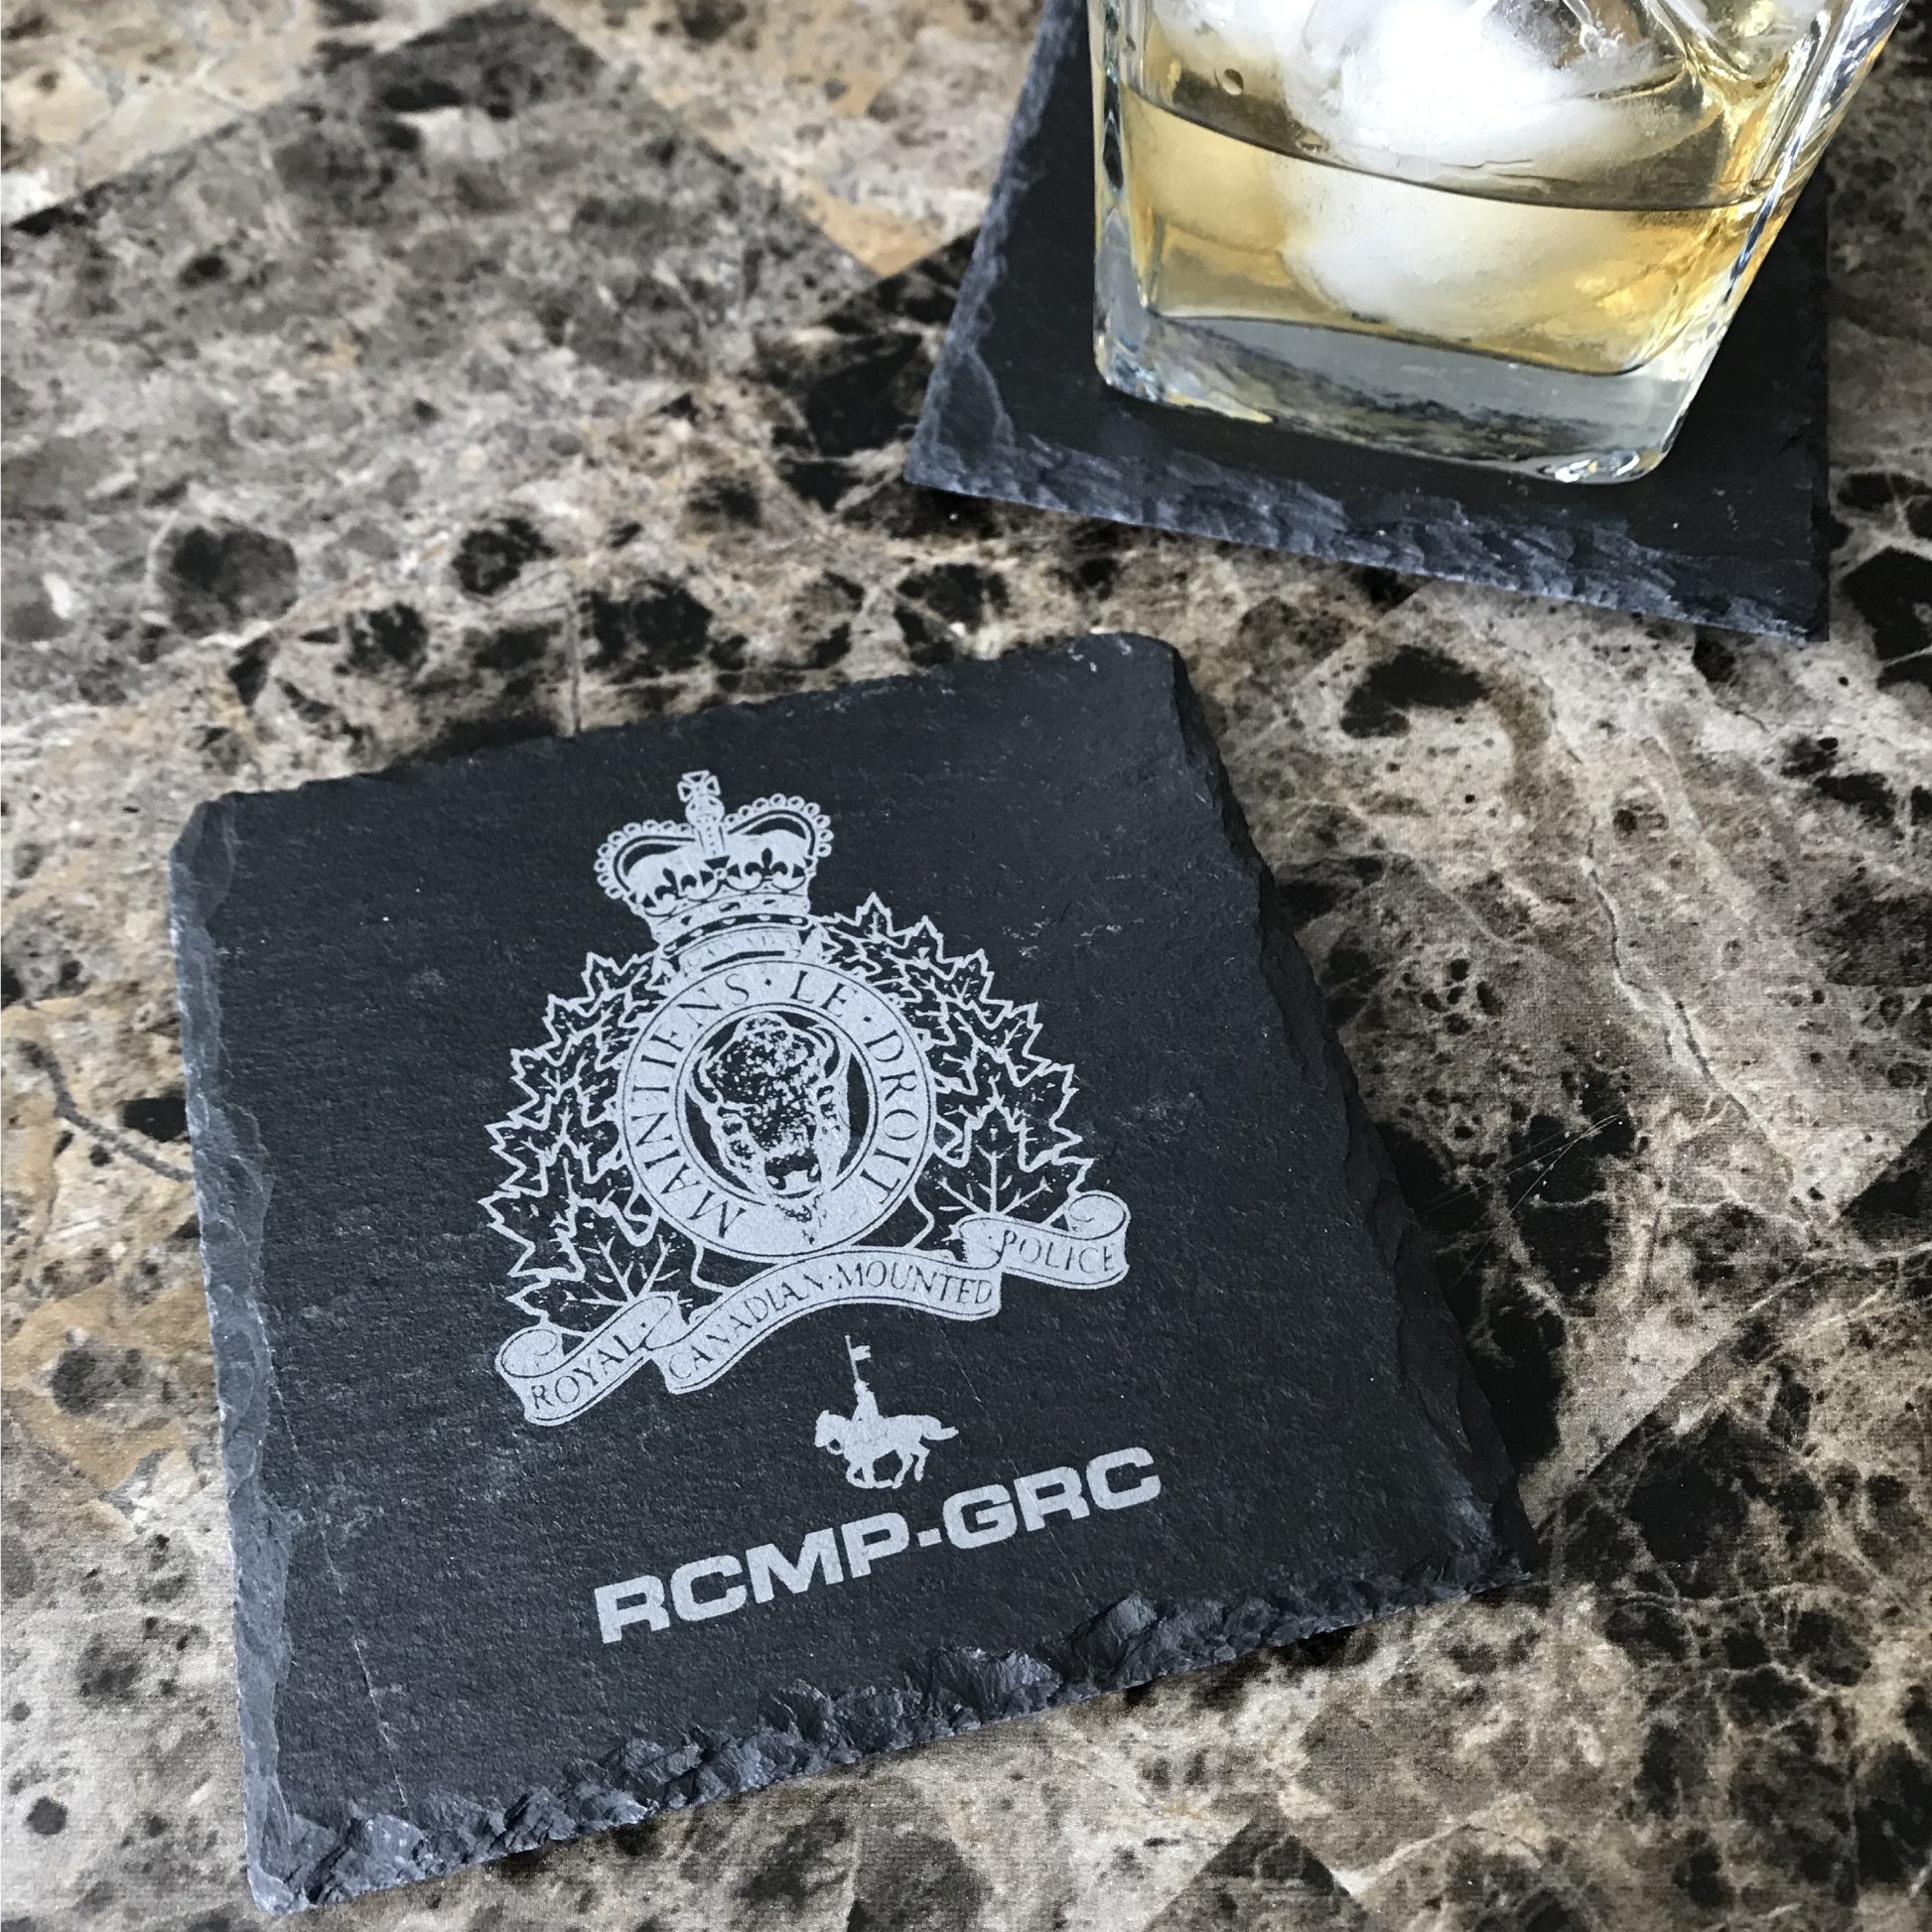 AHS Peace Officer Stone Slate Coasters-911 Duty Gear-911 Duty Gear Canada